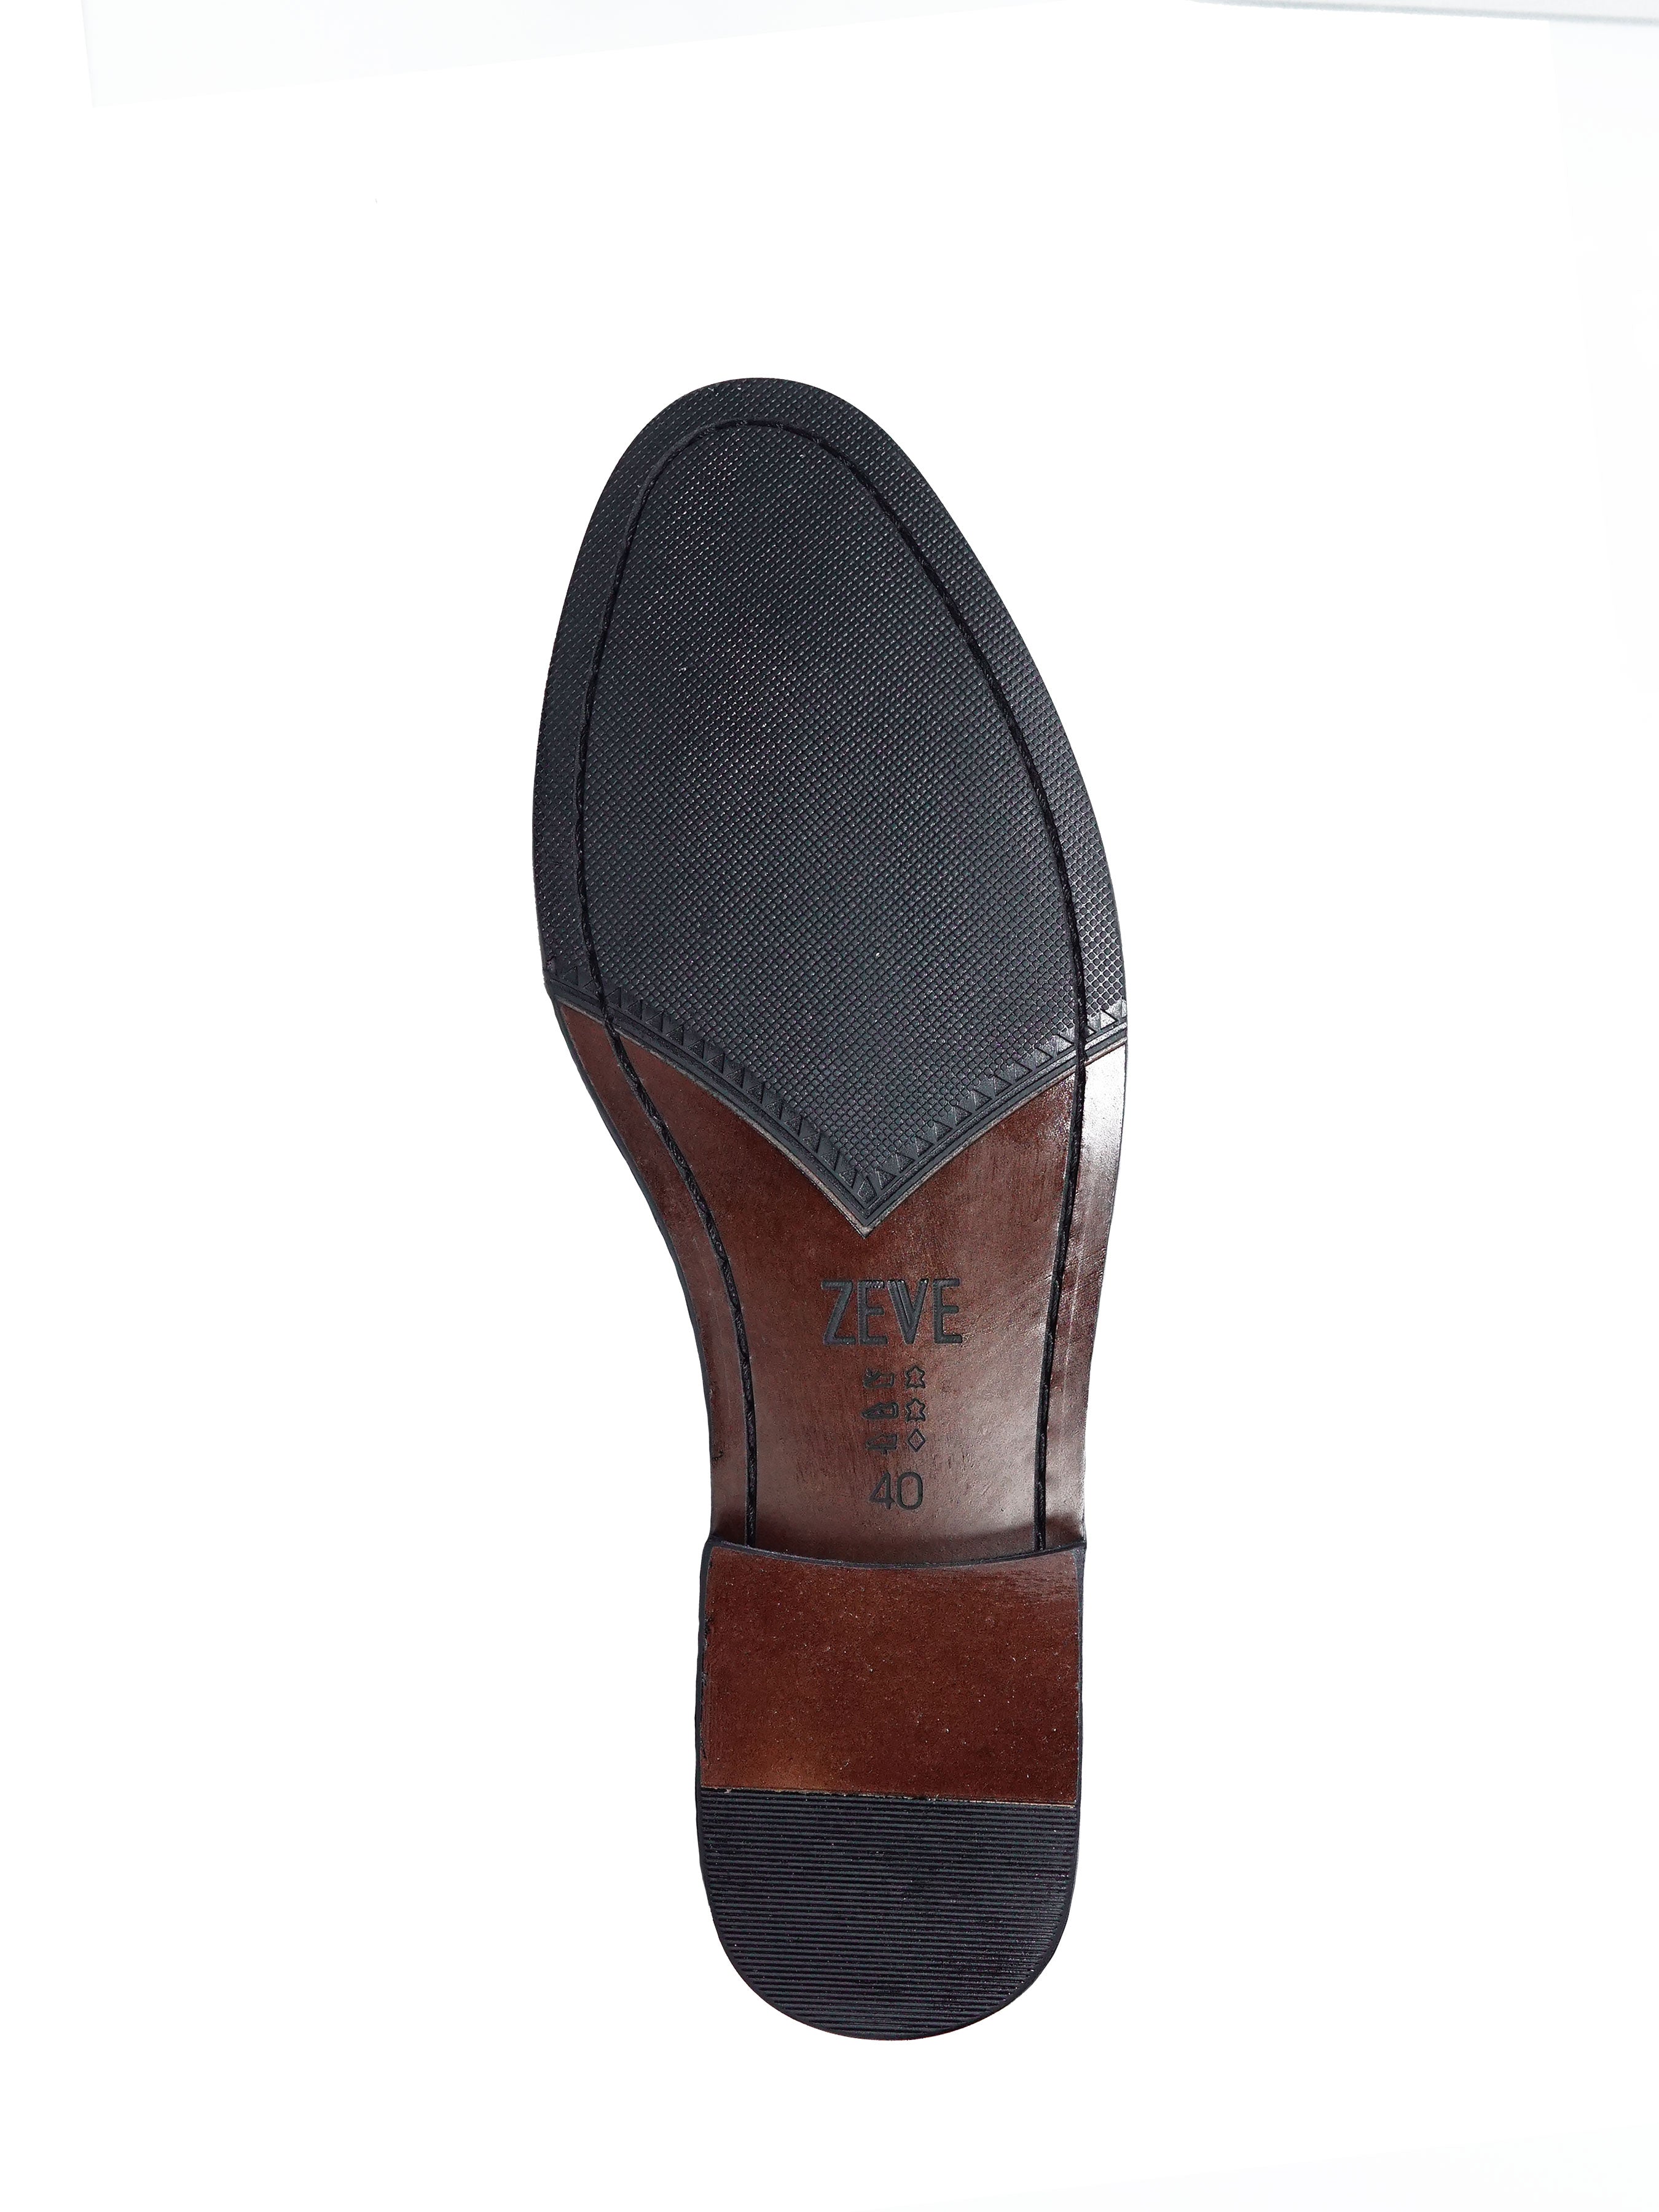 Mules Slingback Strap - Black Croco Leather Horsebit Buckle - Zeve Shoes